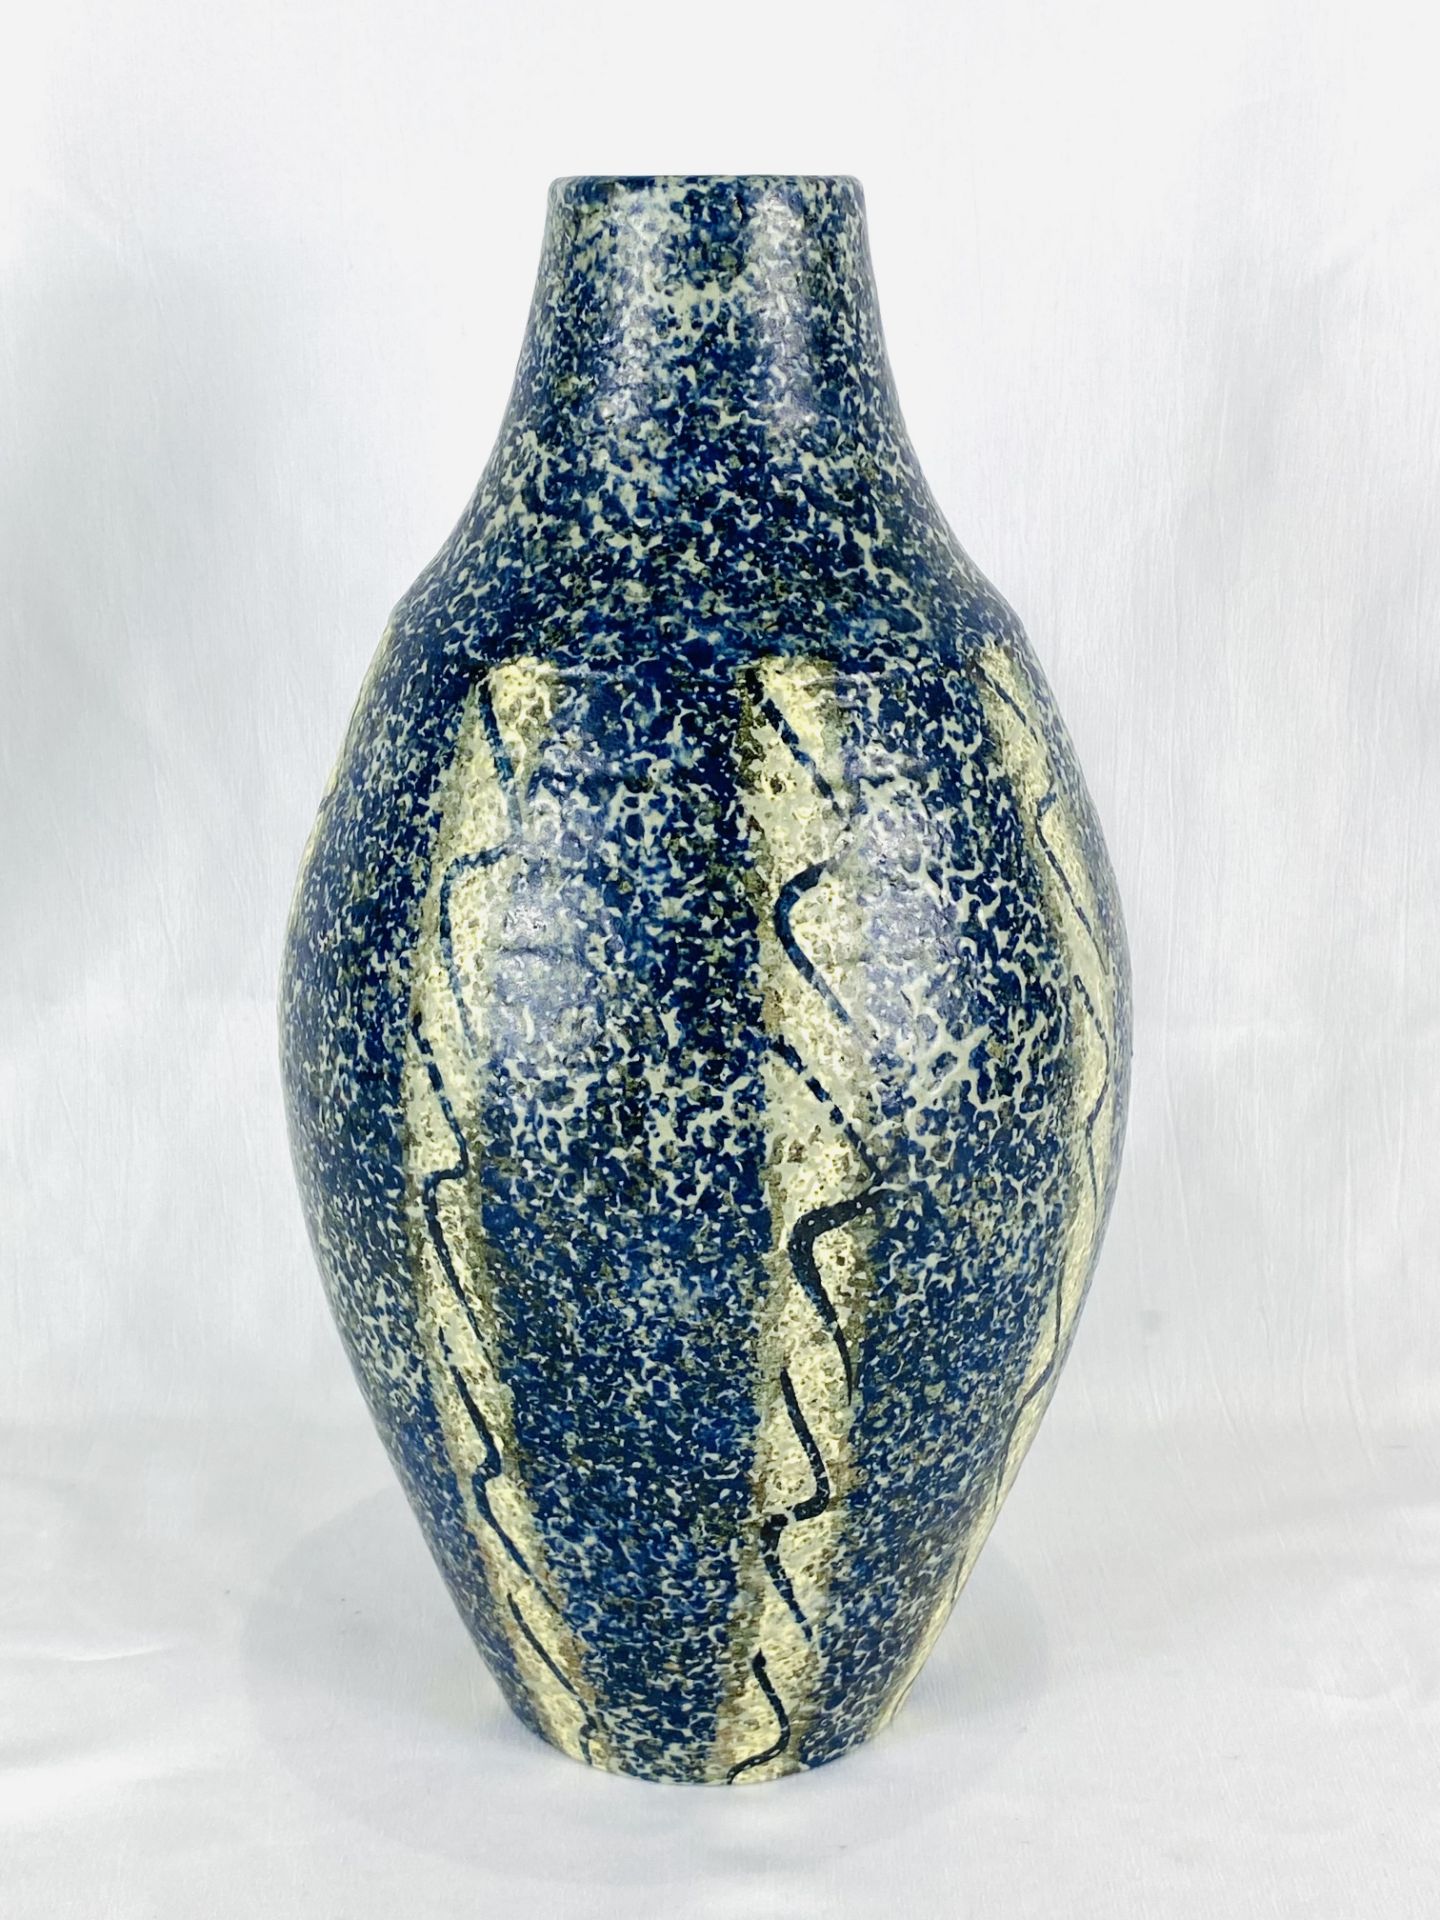 Studio pottery vase by Richard Phethean - Image 2 of 3